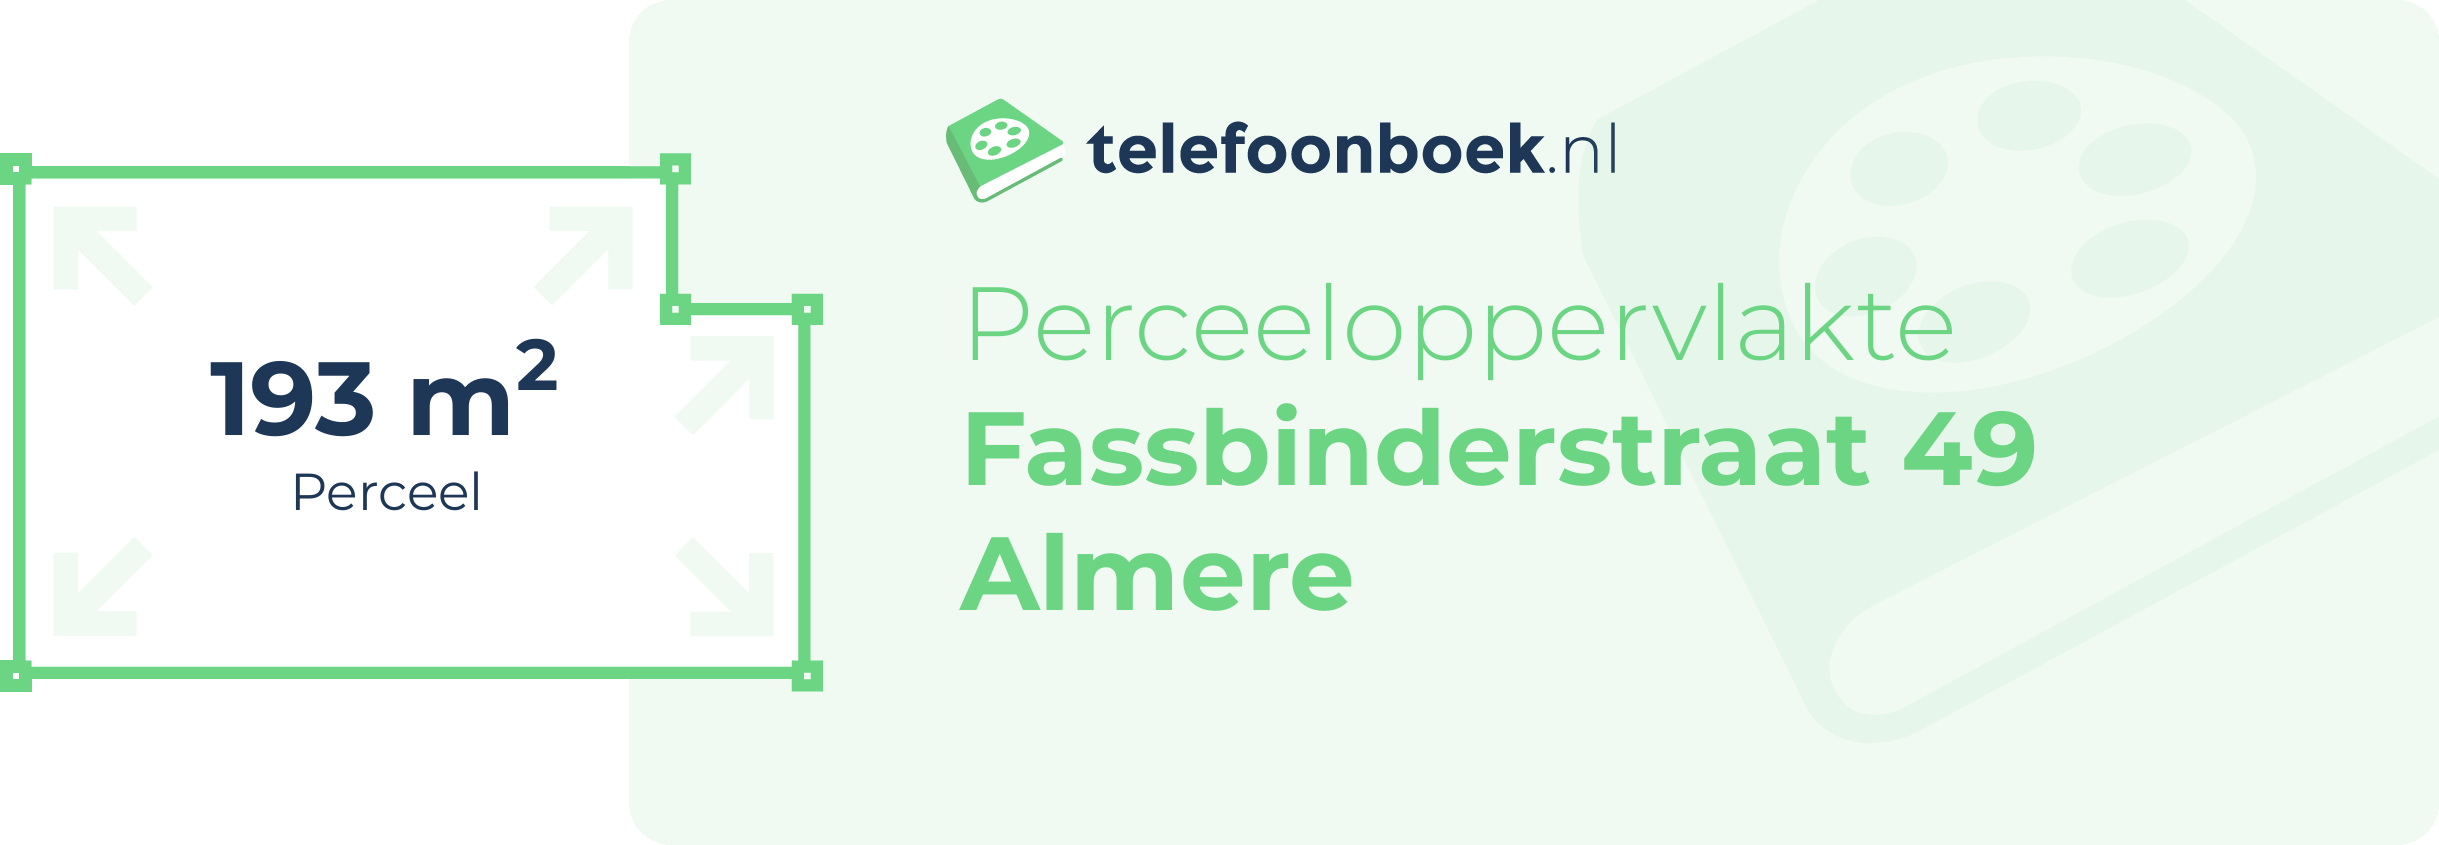 Perceeloppervlakte Fassbinderstraat 49 Almere